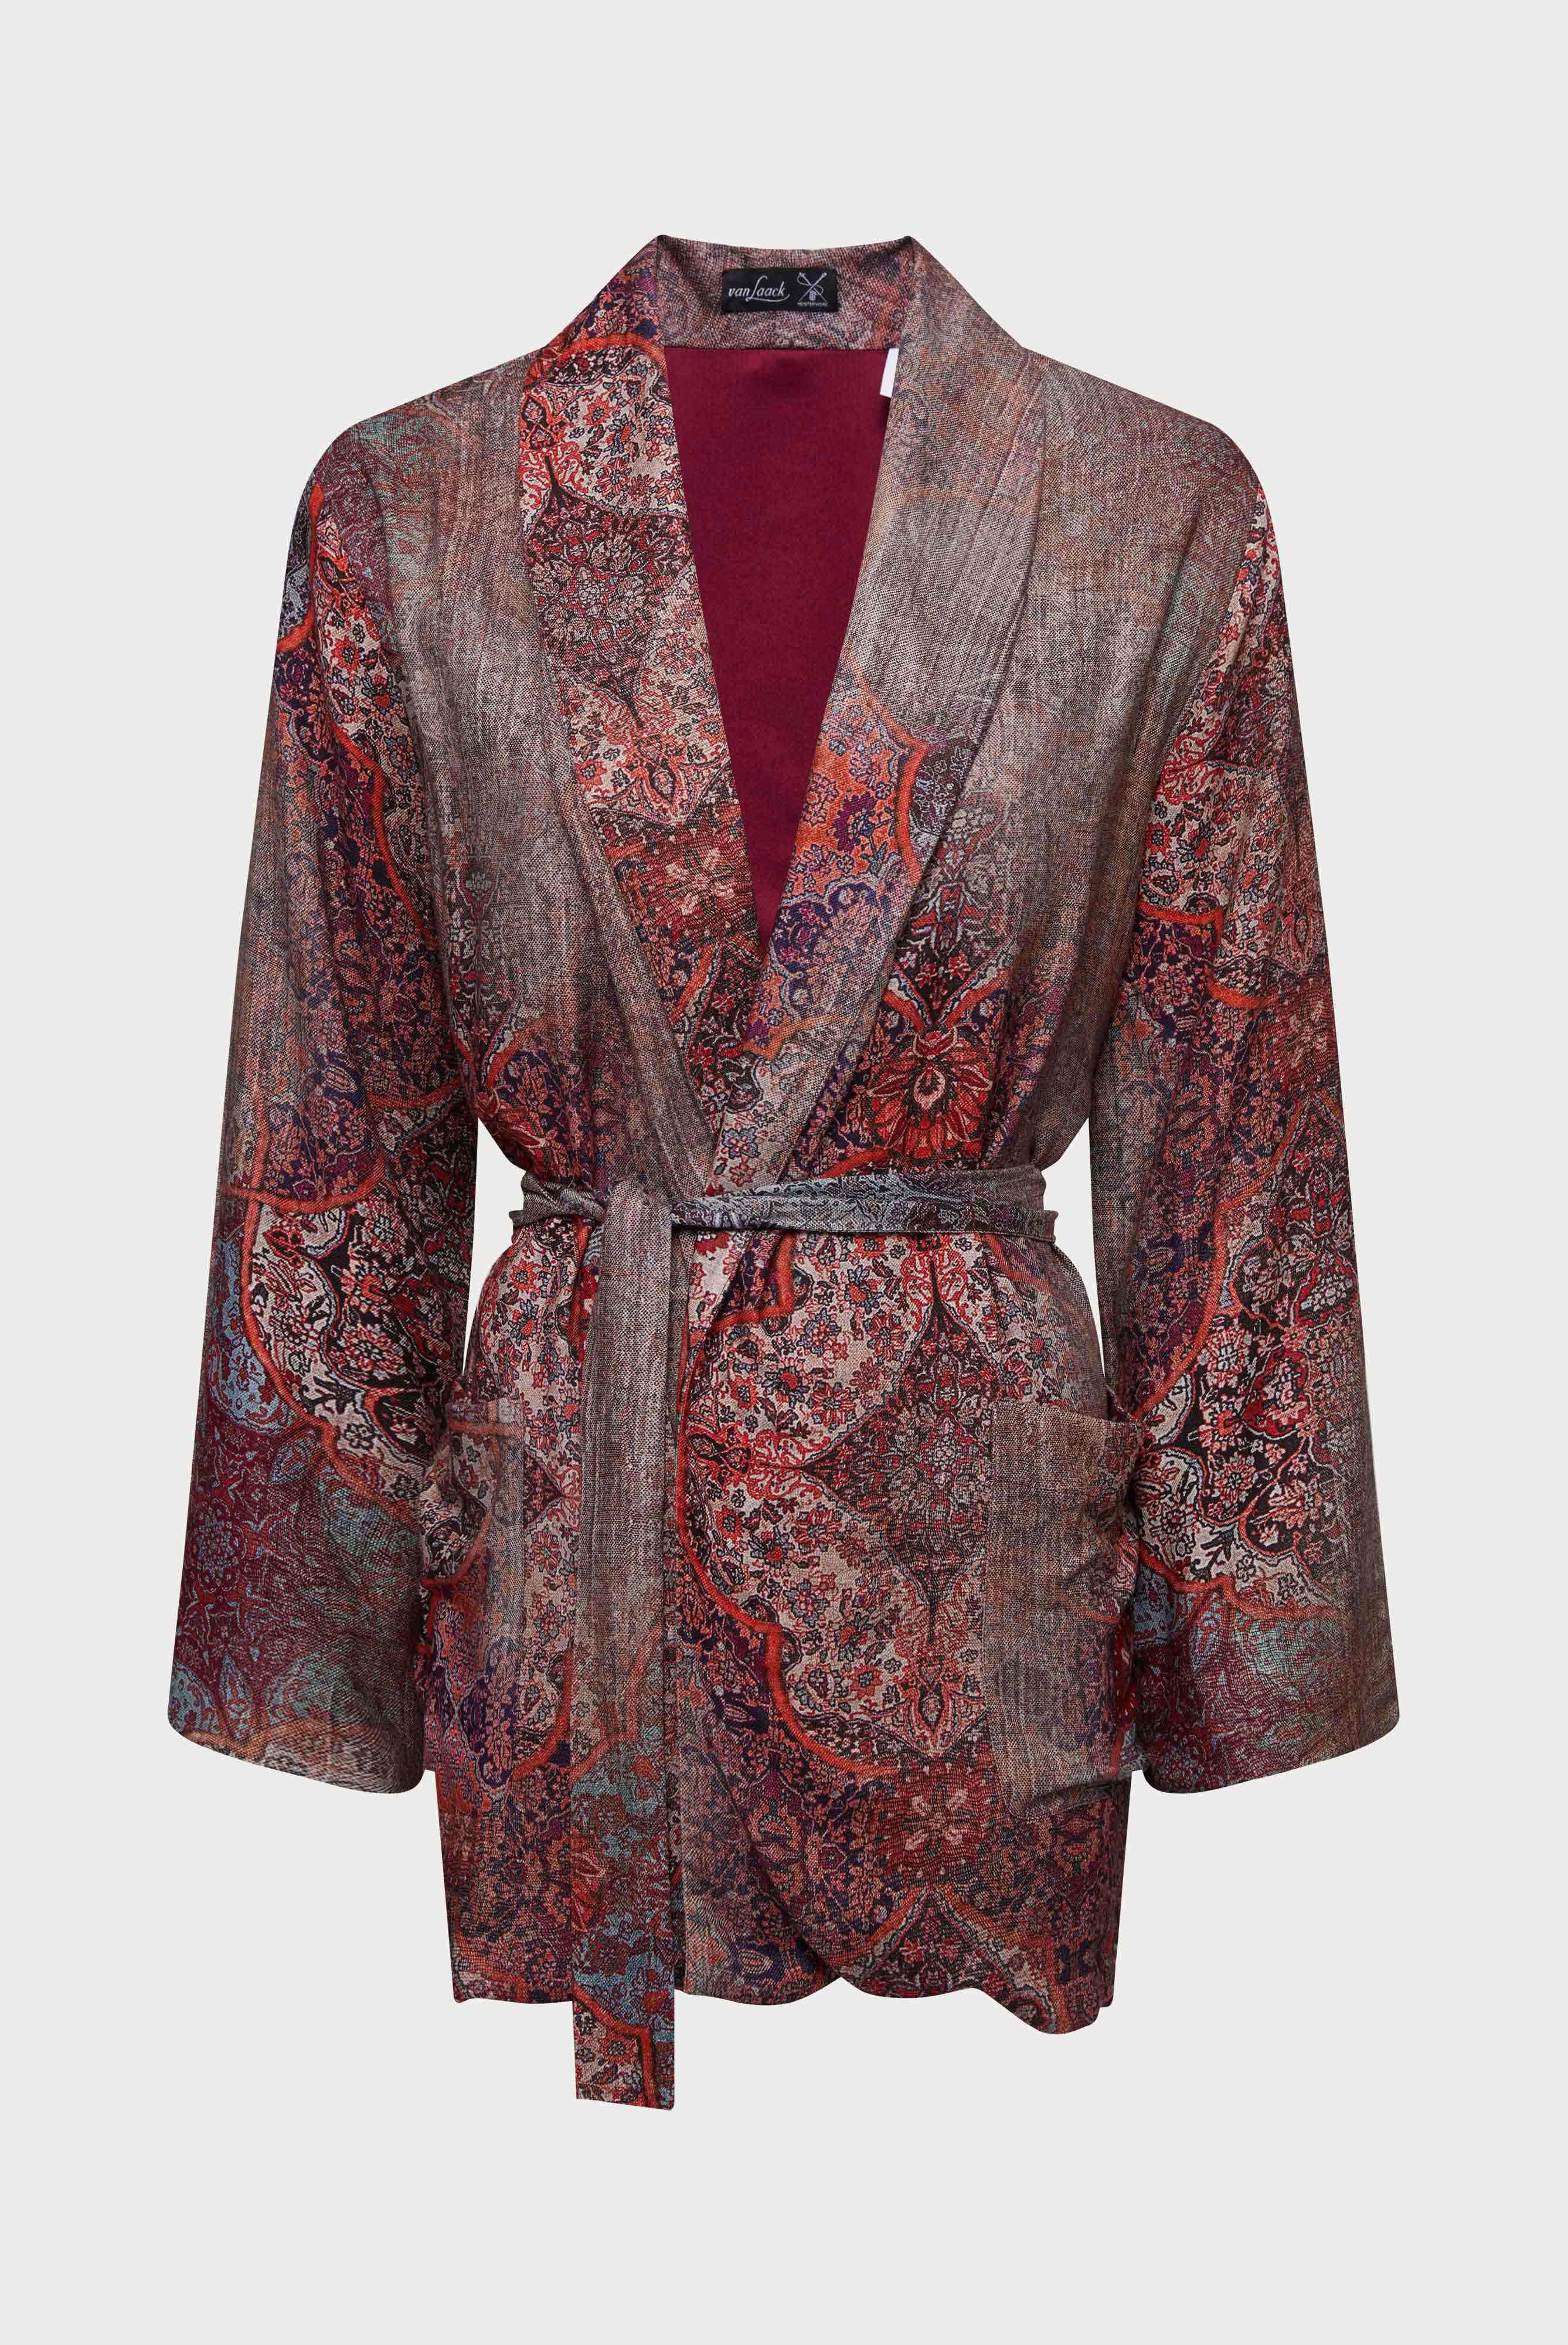 Blazers+Kimono with Vintage Print+05.658C.52.172026.357.34